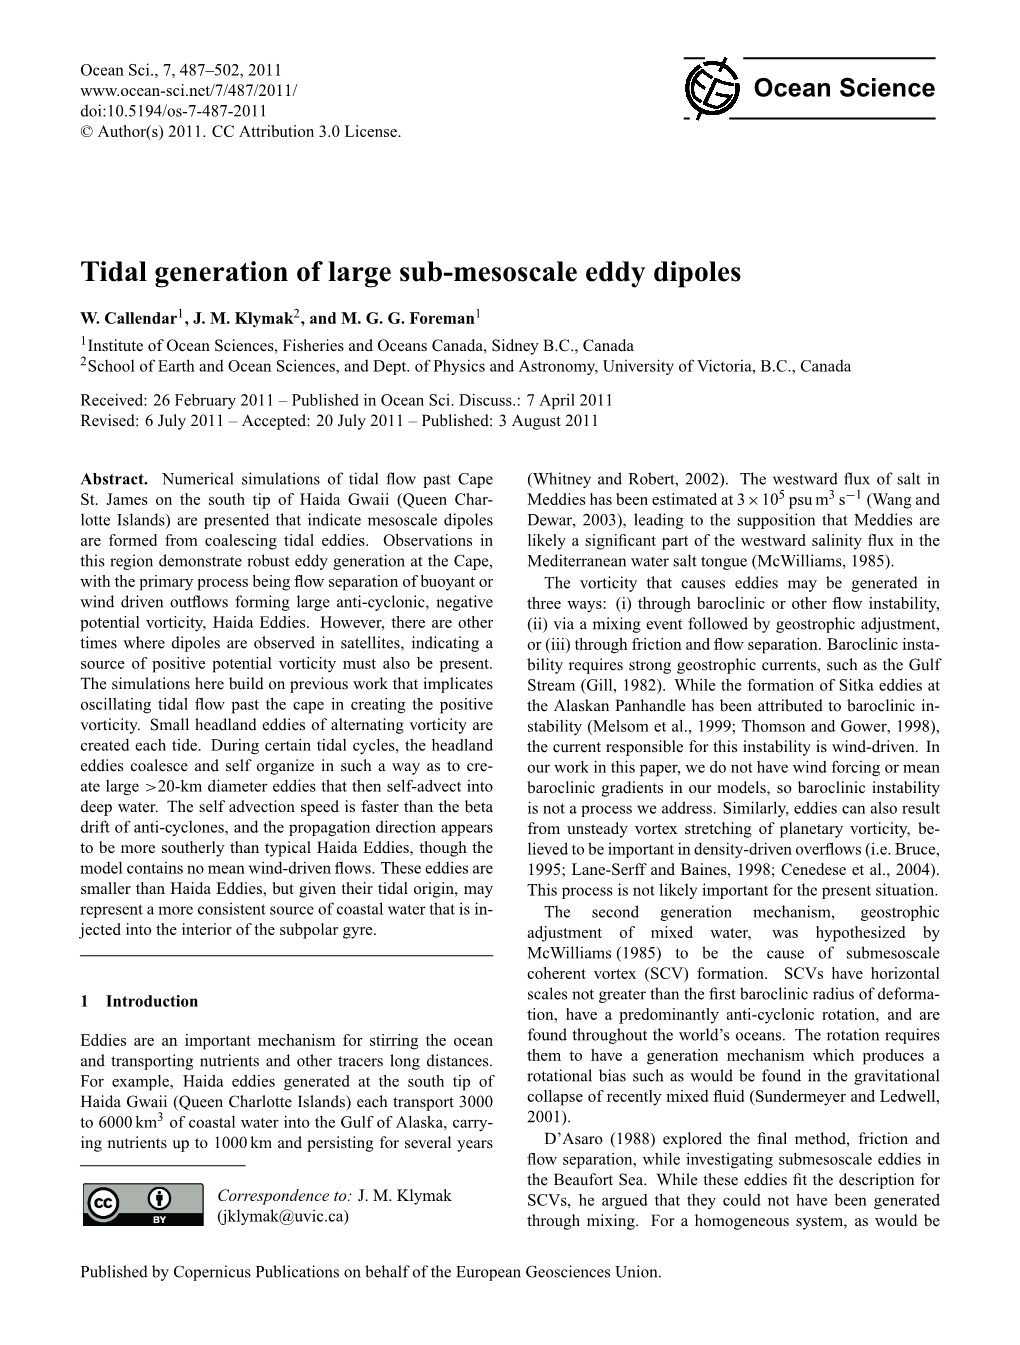 Tidal Generation of Large Sub-Mesoscale Eddy Dipoles